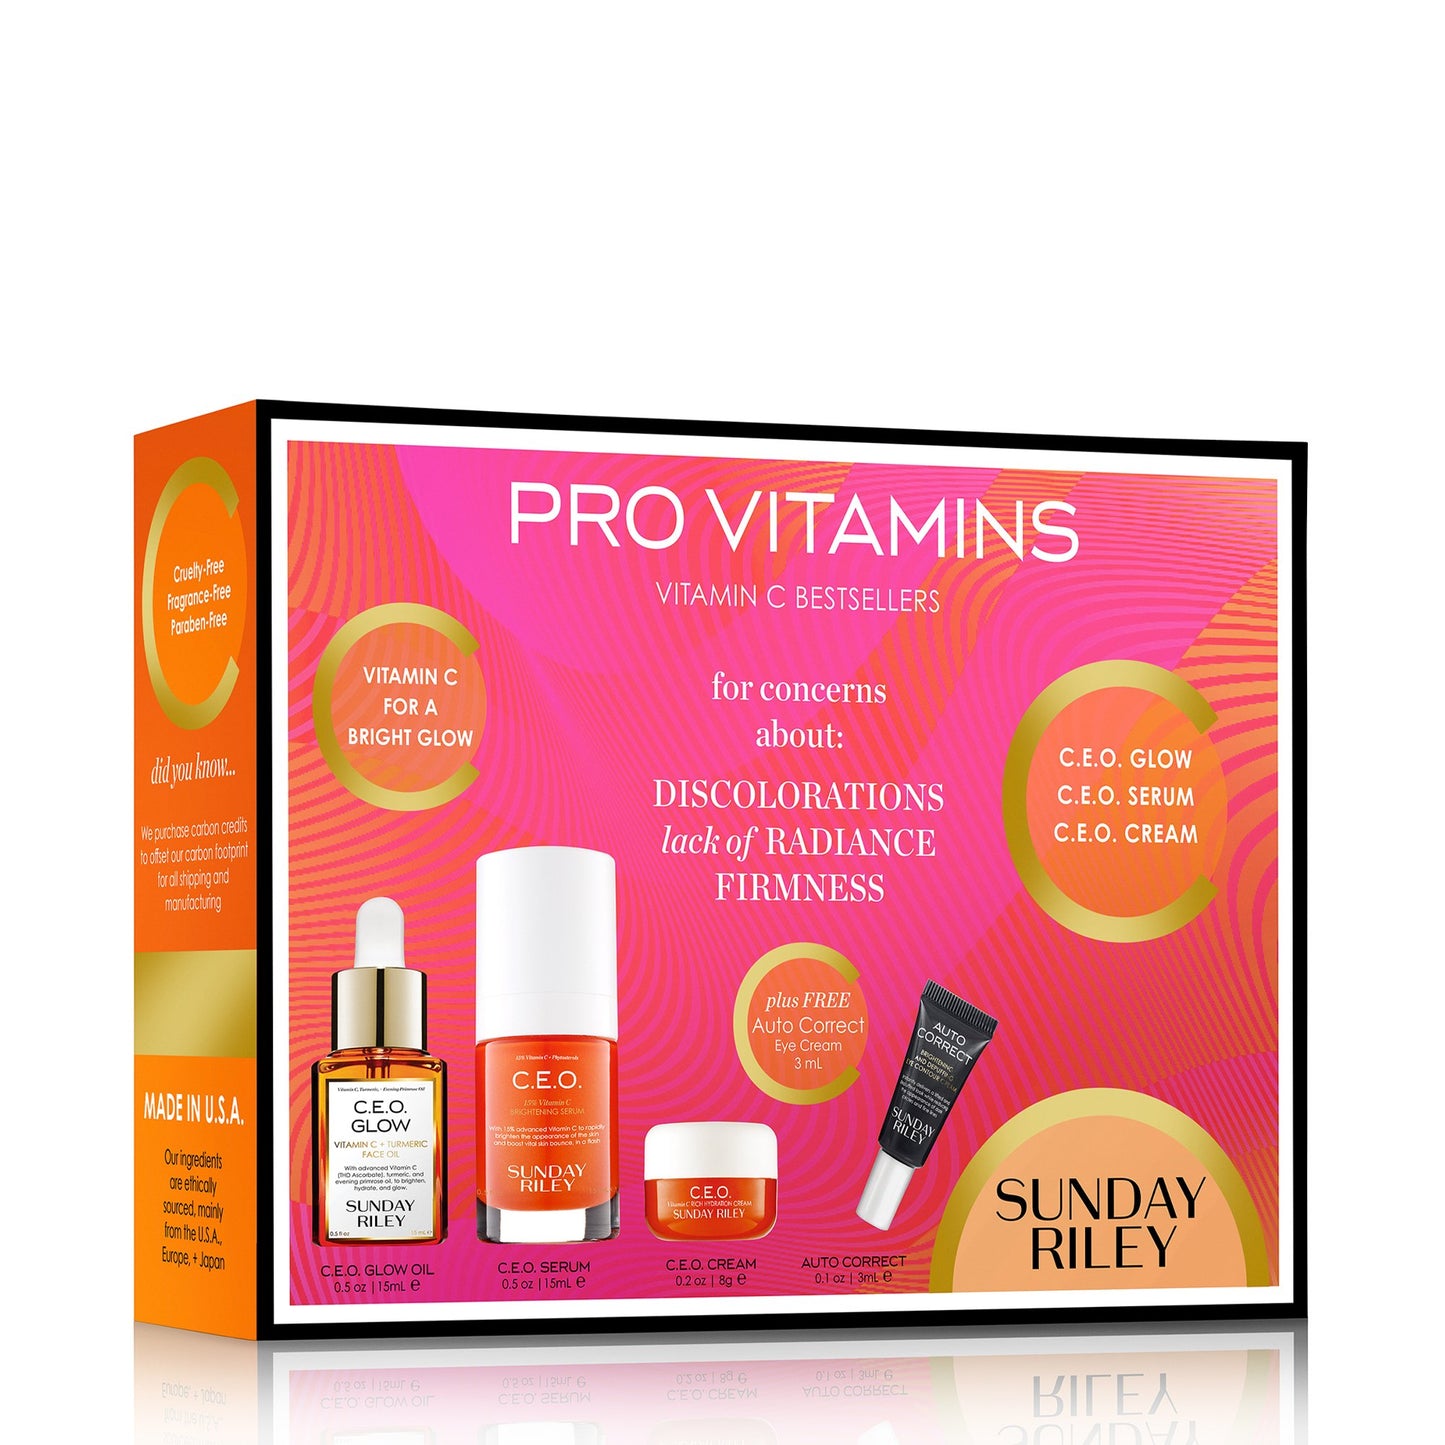 Pro Vitamins kit pack shot